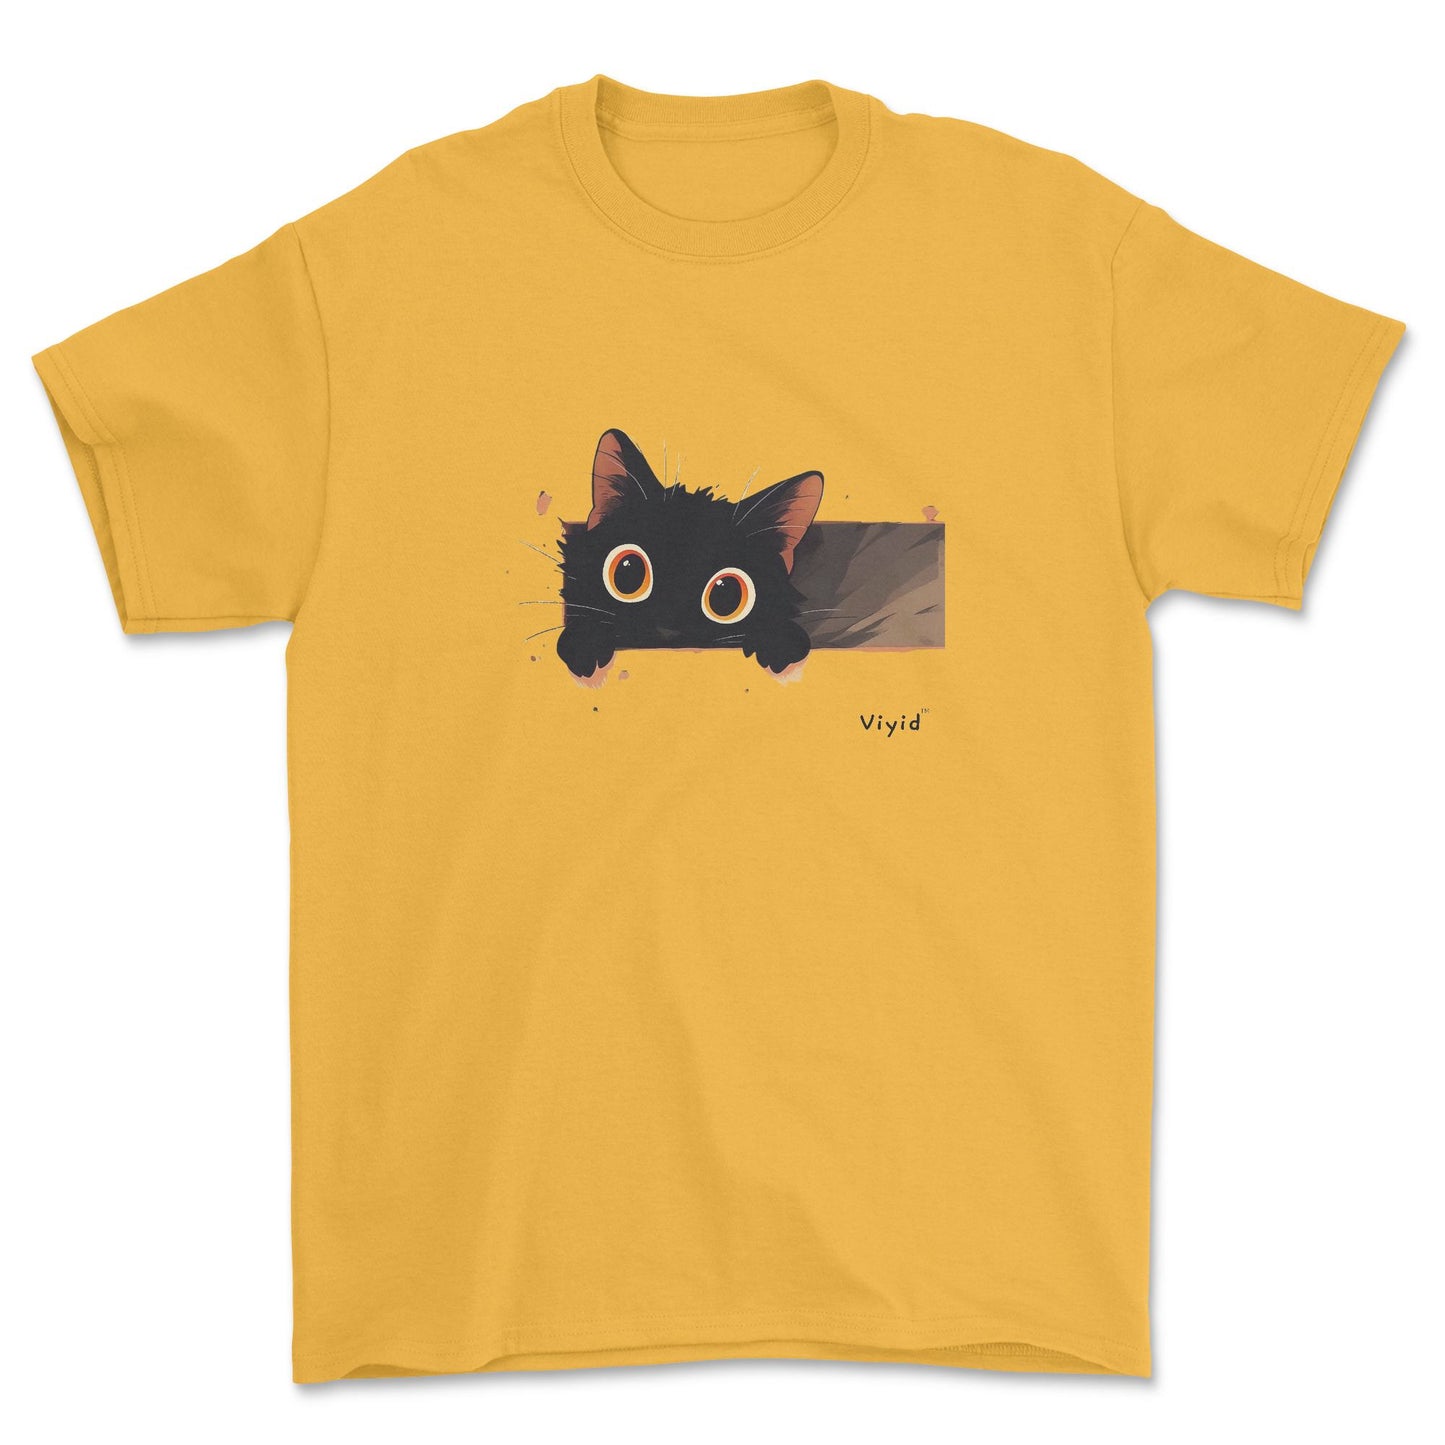 Peeping black cat adult t-shirt gold.